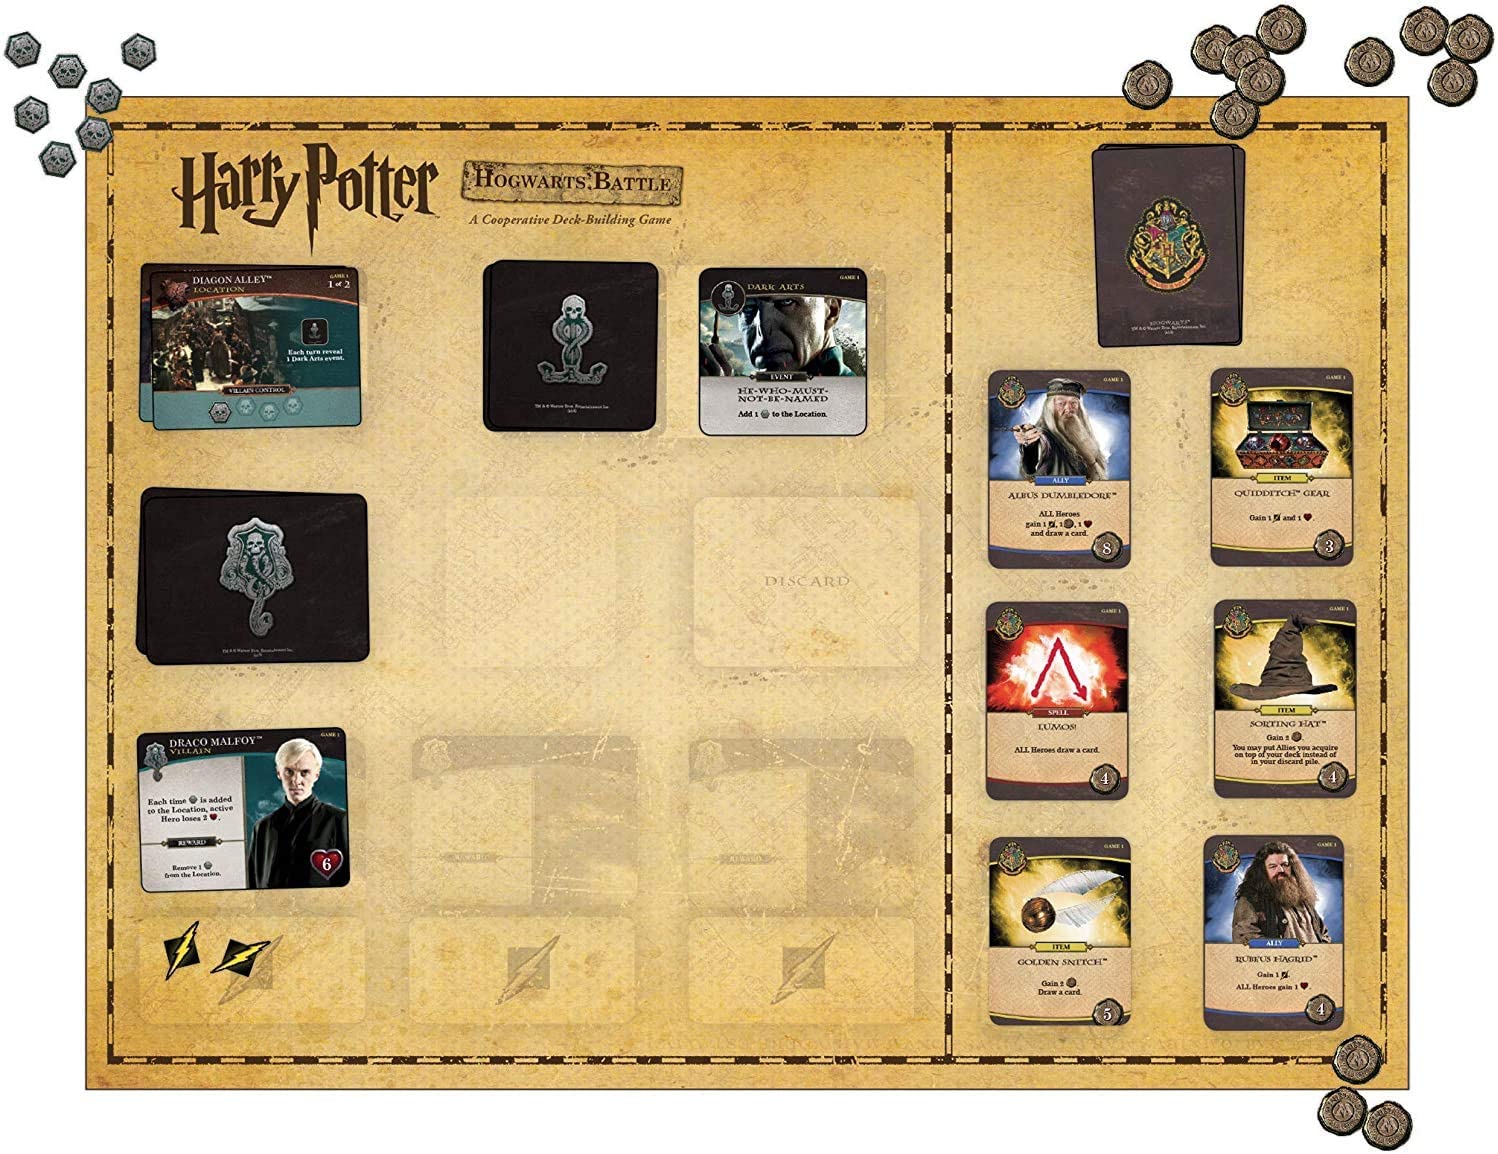 Harry potter hogwarts battle - Harry Potter